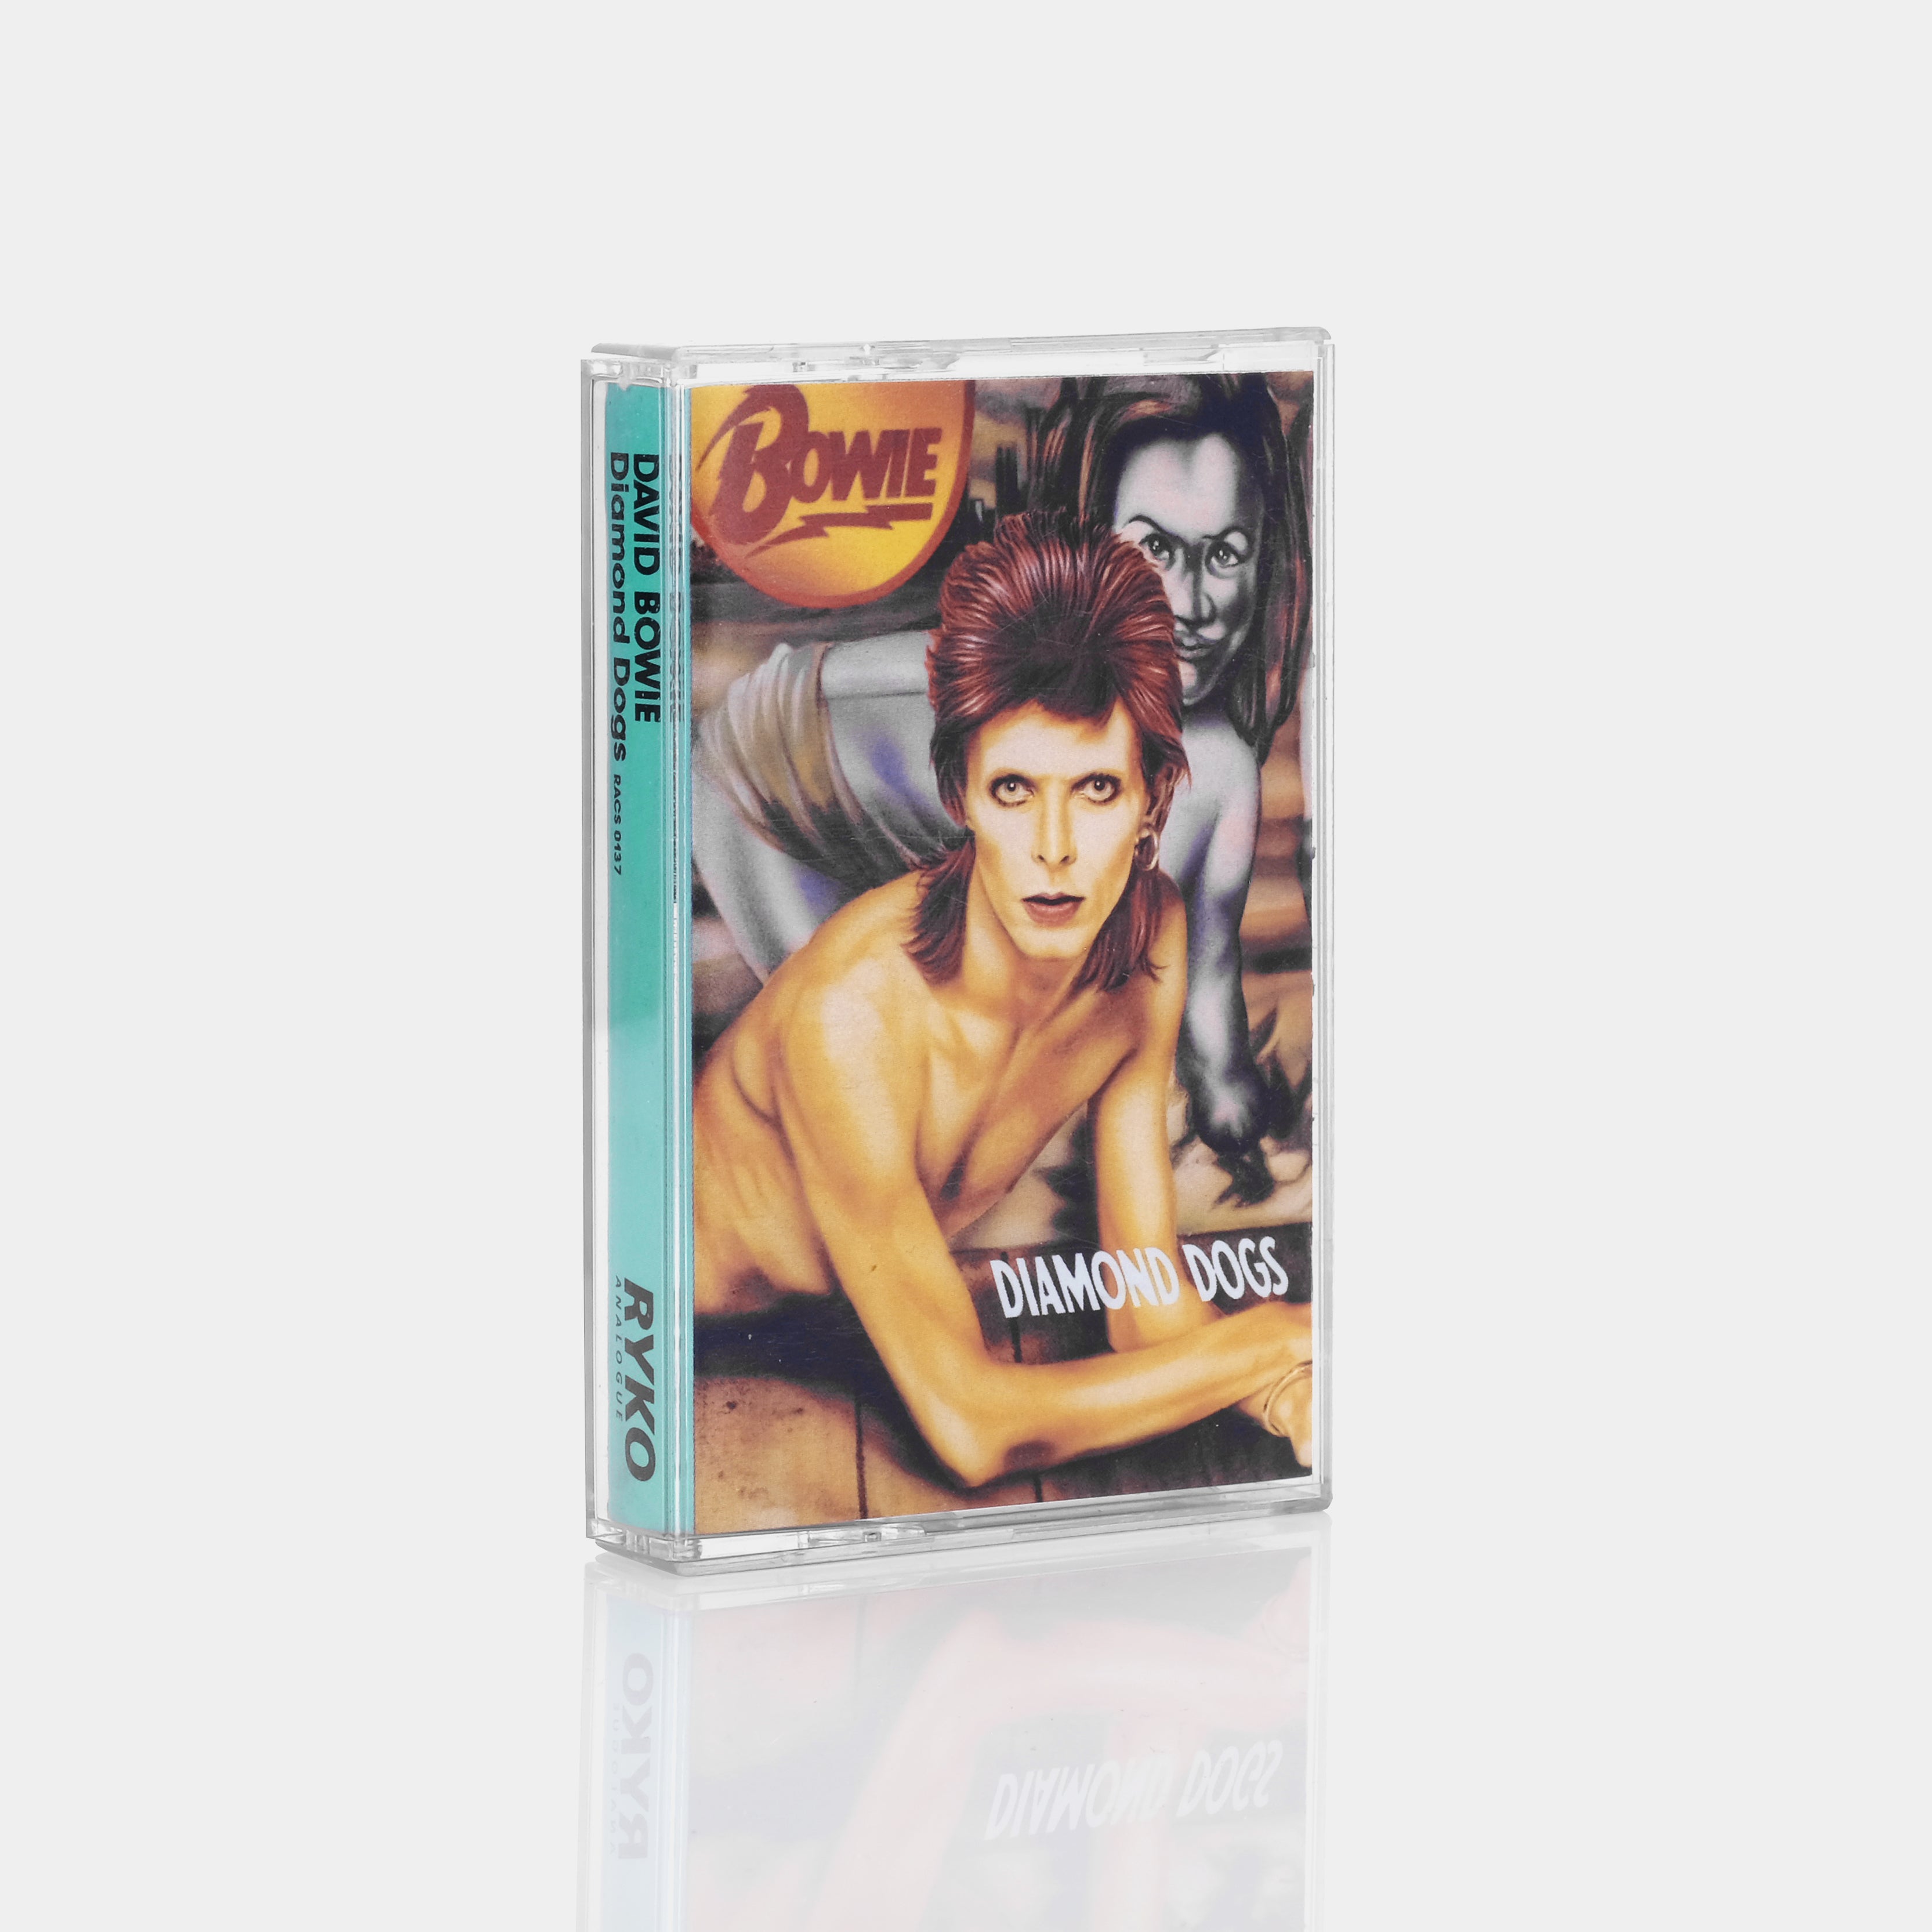 David Bowie - Diamond Dogs Cassette Tape